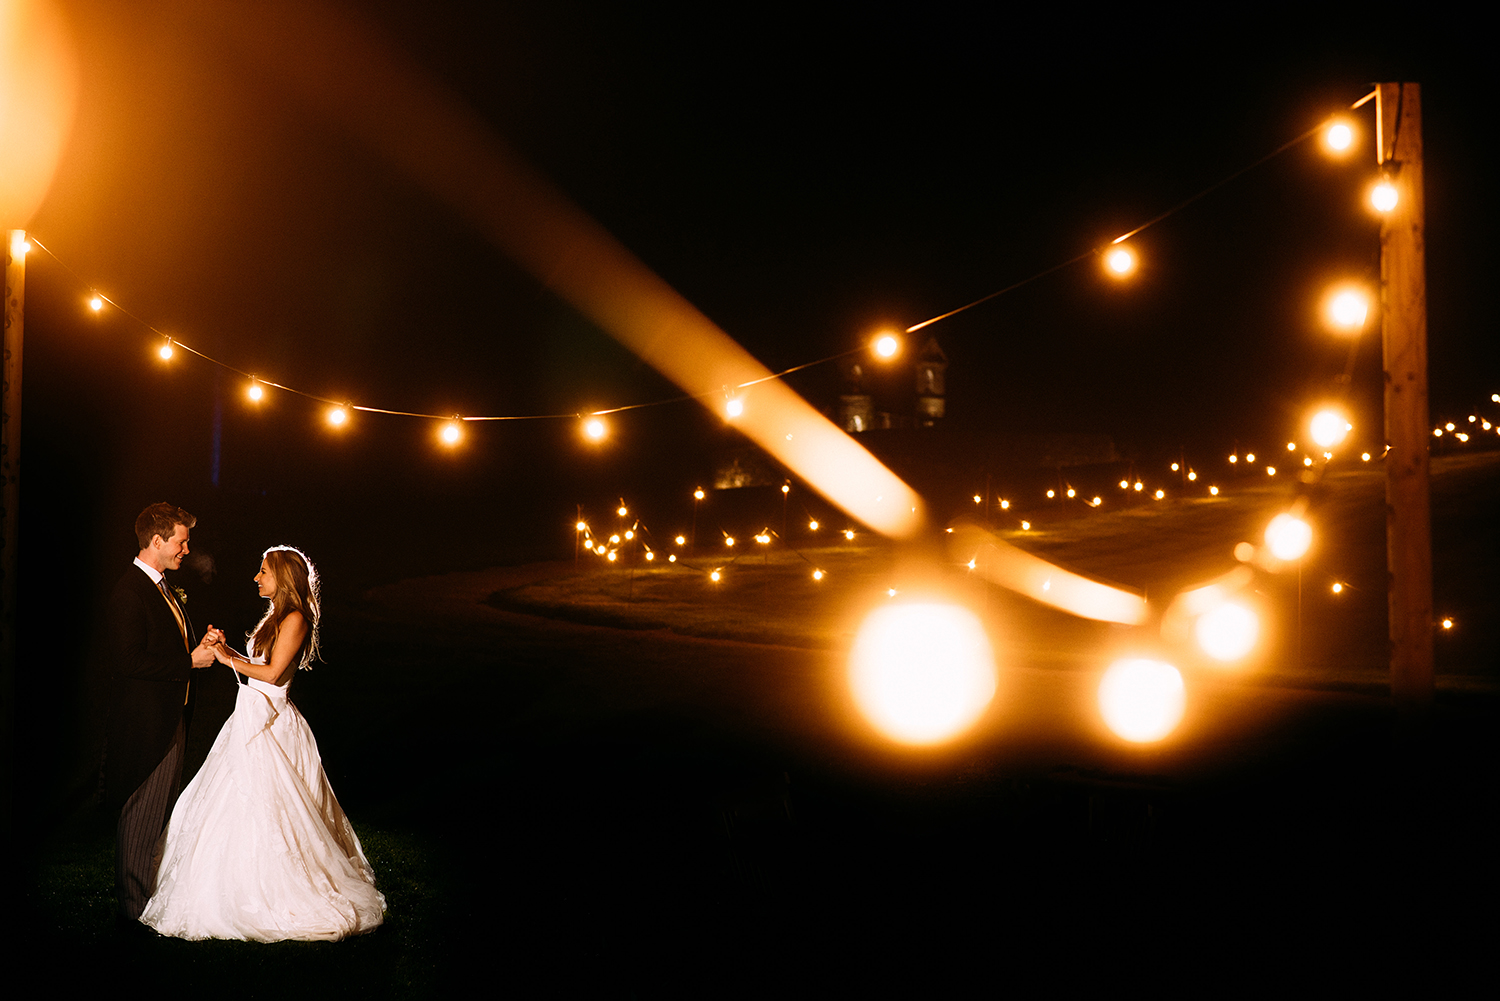  off camera flash night time portrait of bride and groom taken through festoon lights 